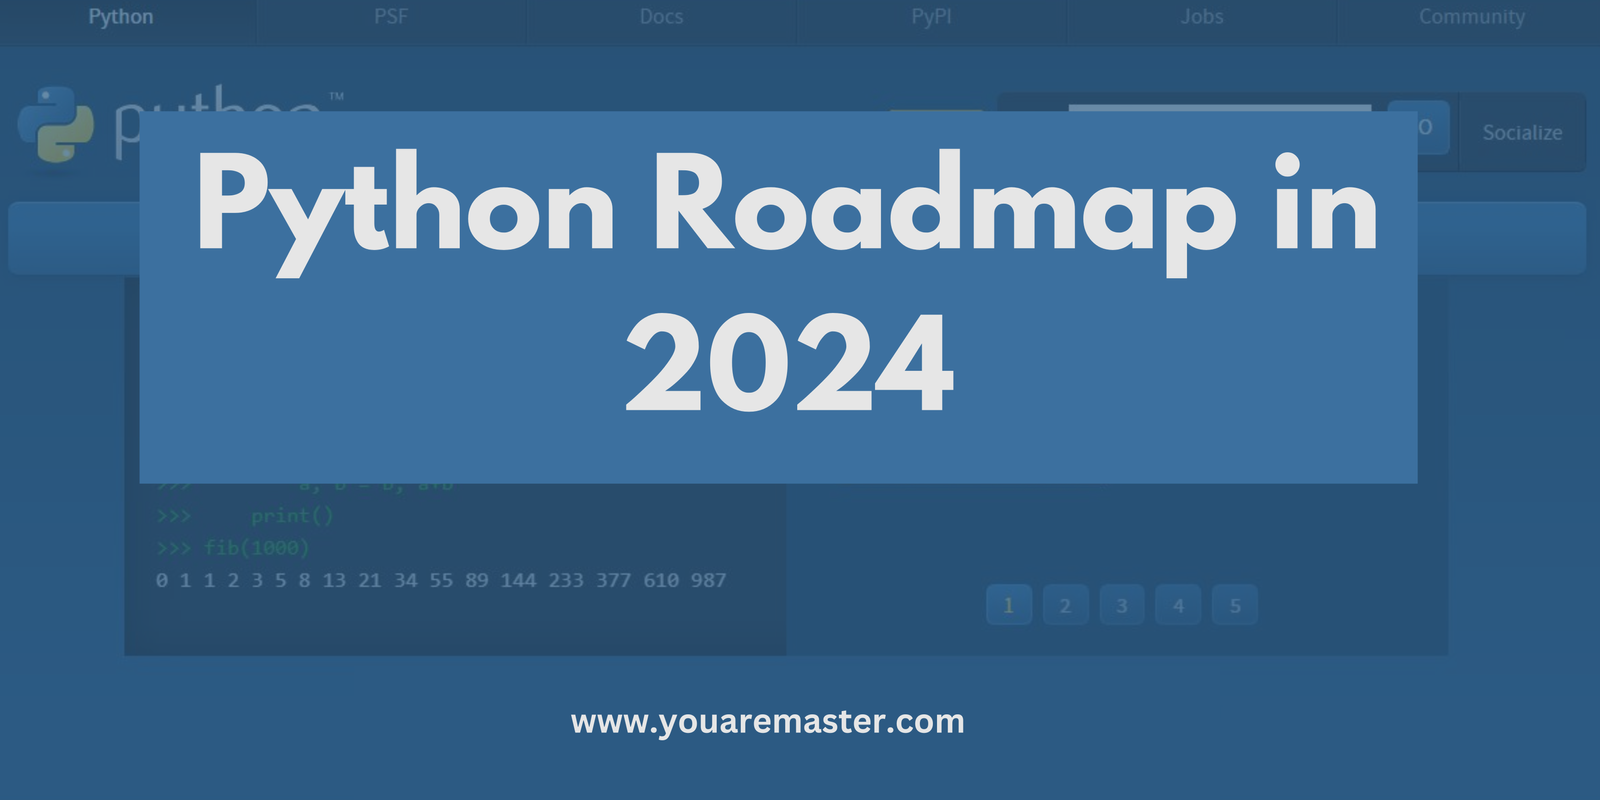 Python Roadmap in 2024